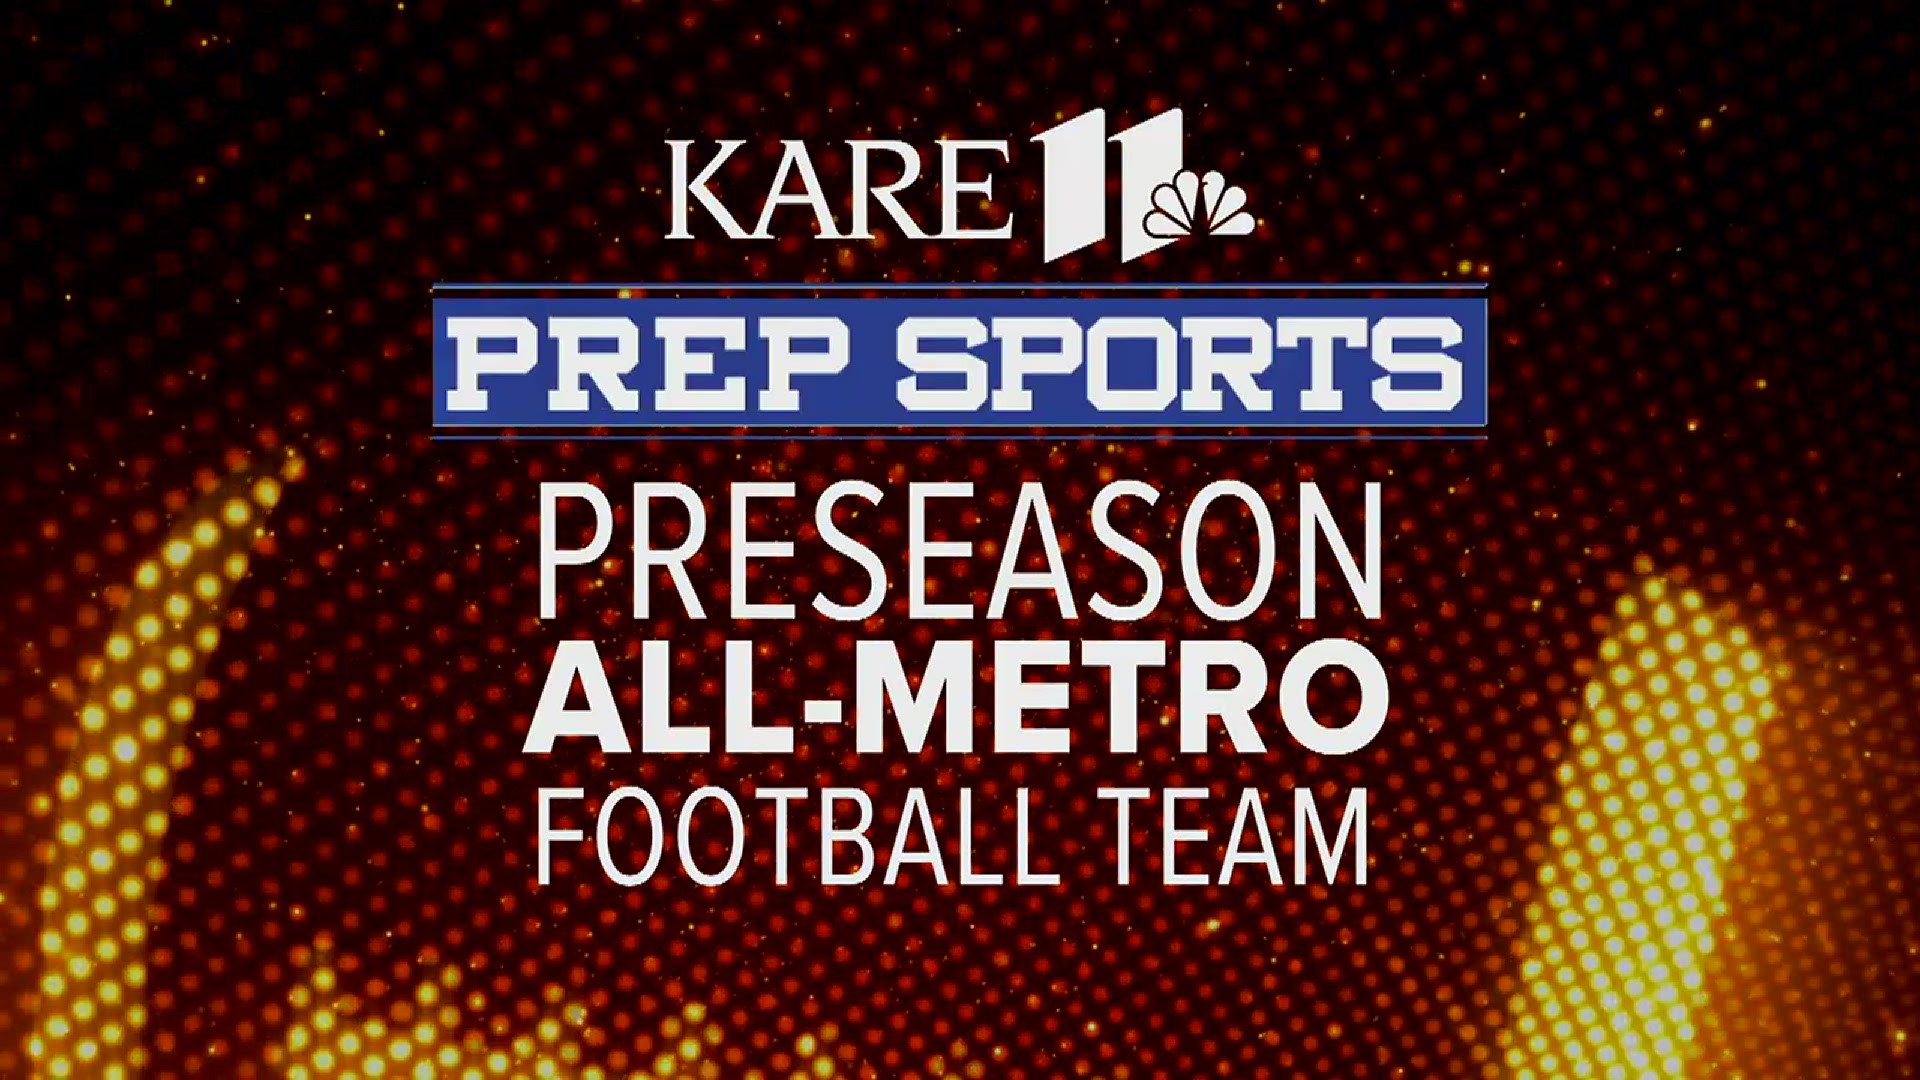 Randy Shaver reveals the 2020 Preseason All-Metro Football Team.